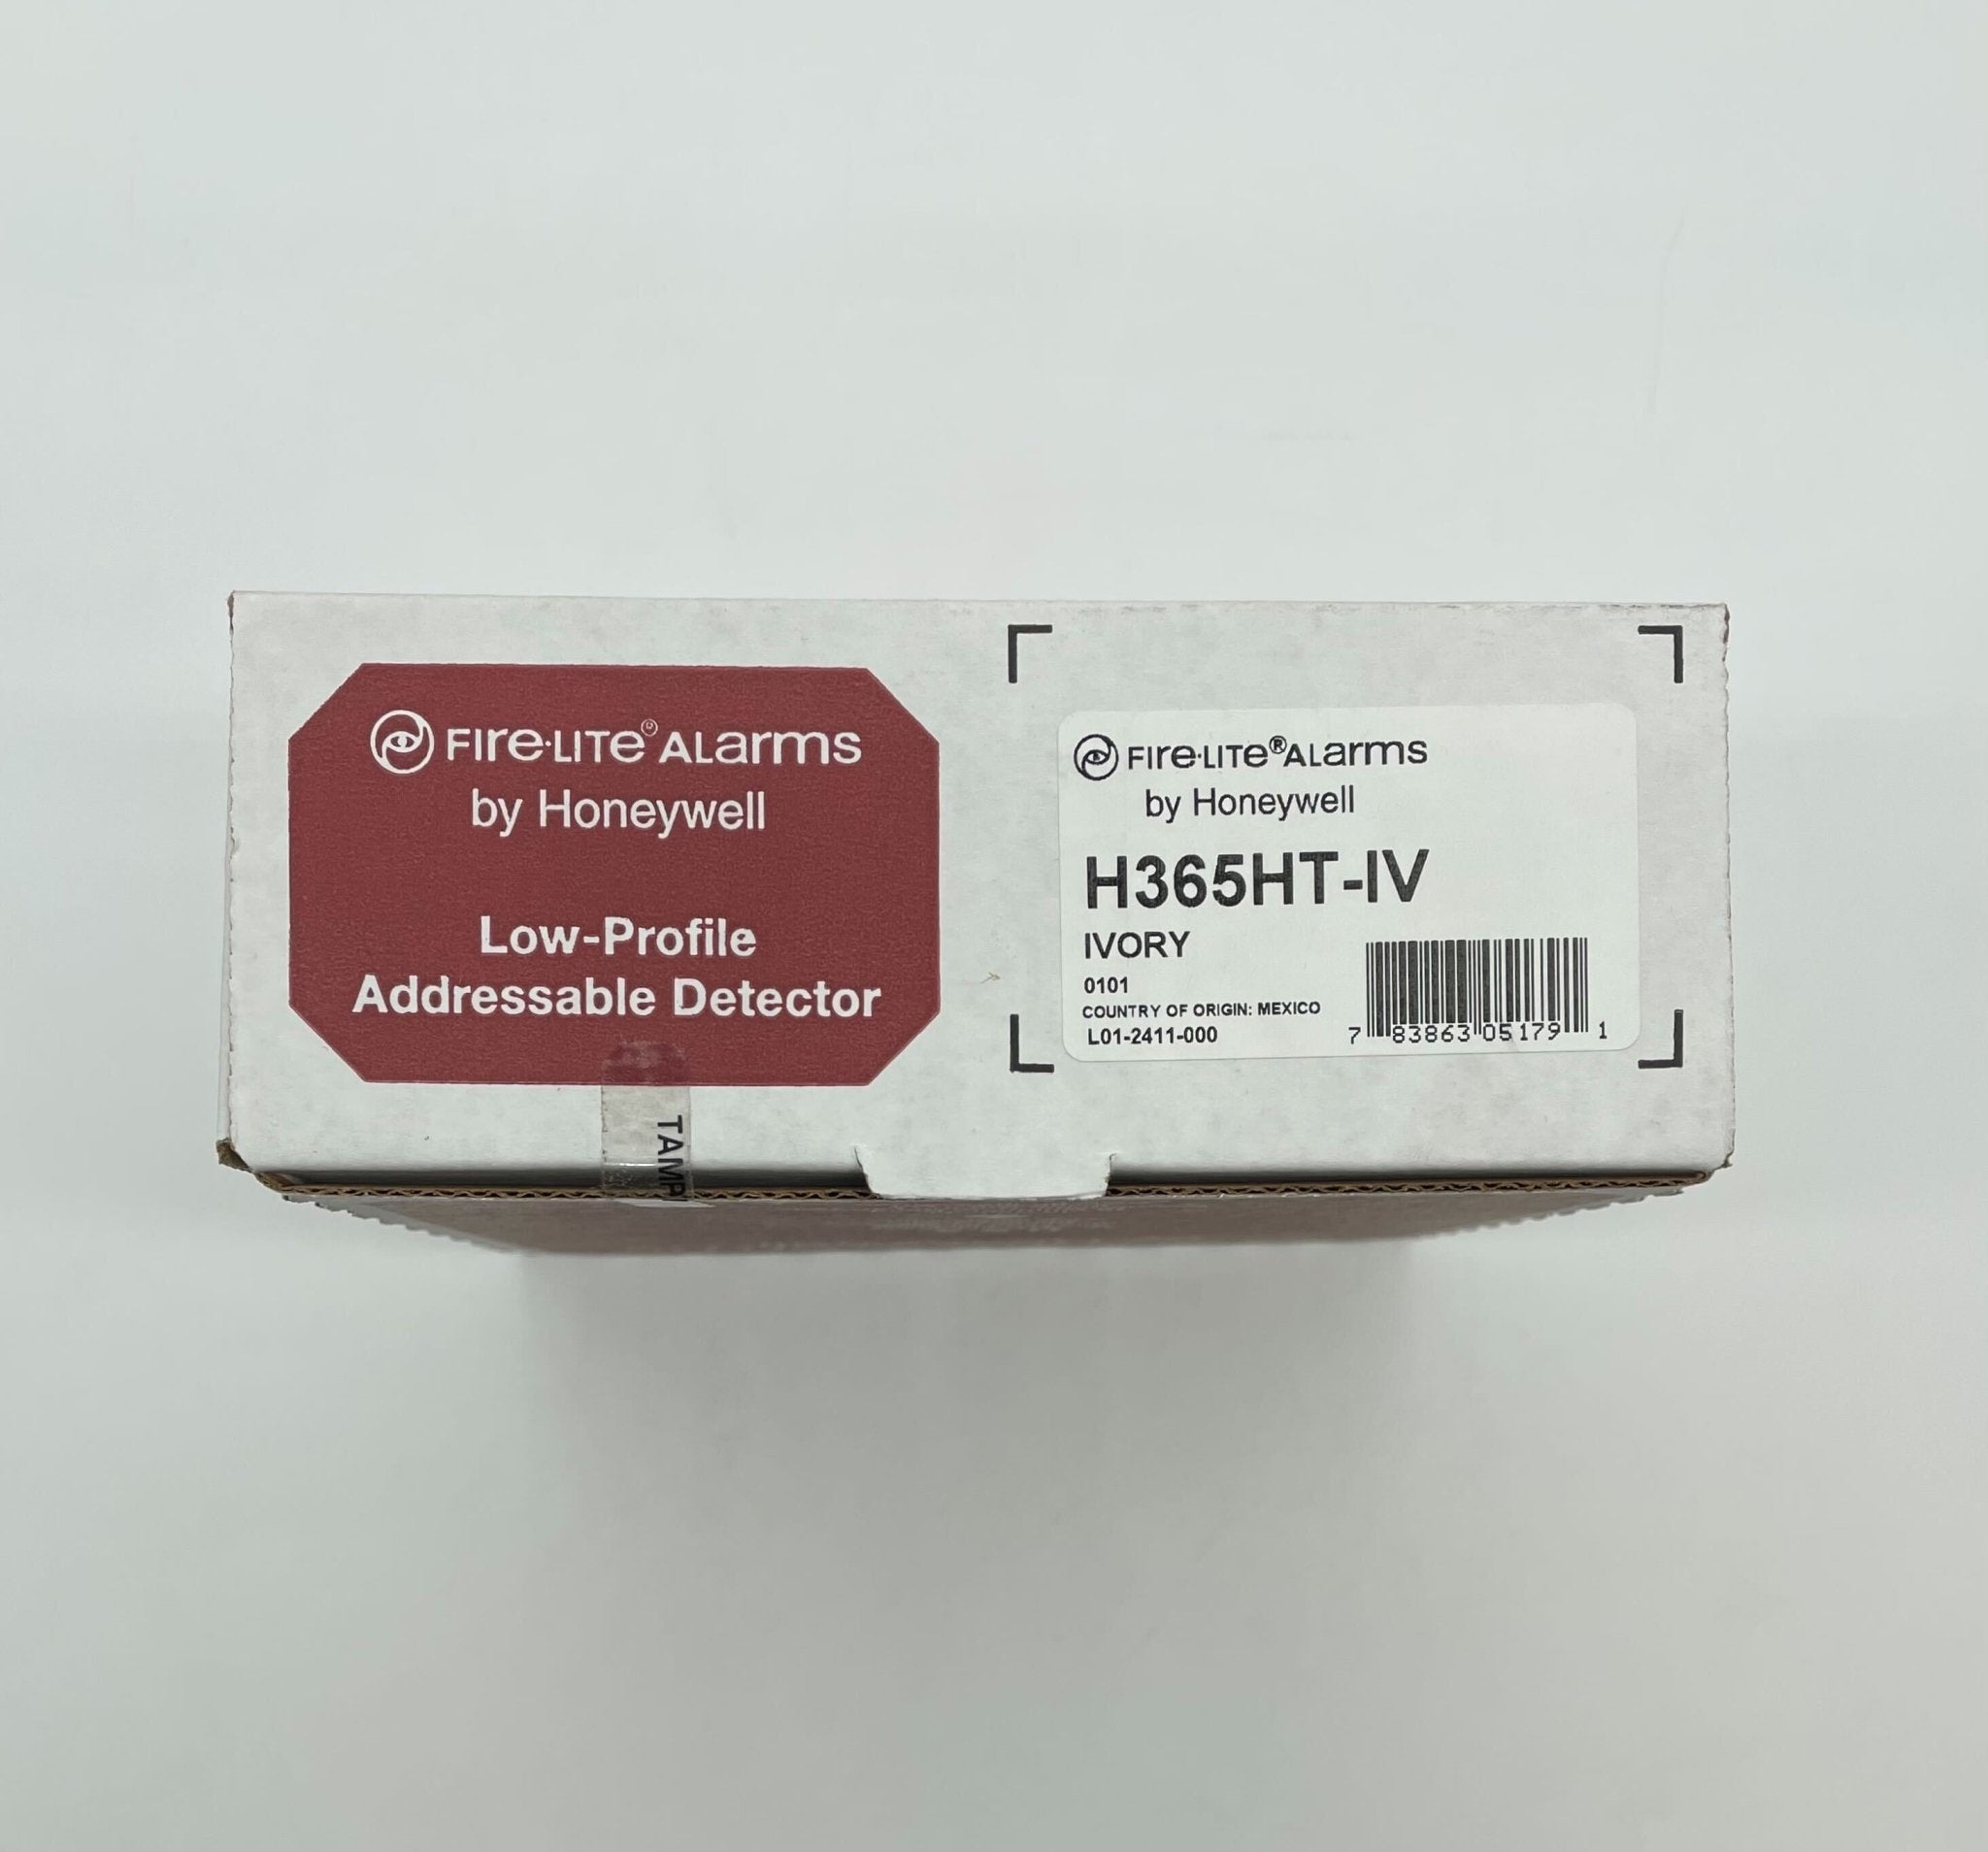 Firelite H365HT-IV - The Fire Alarm Supplier